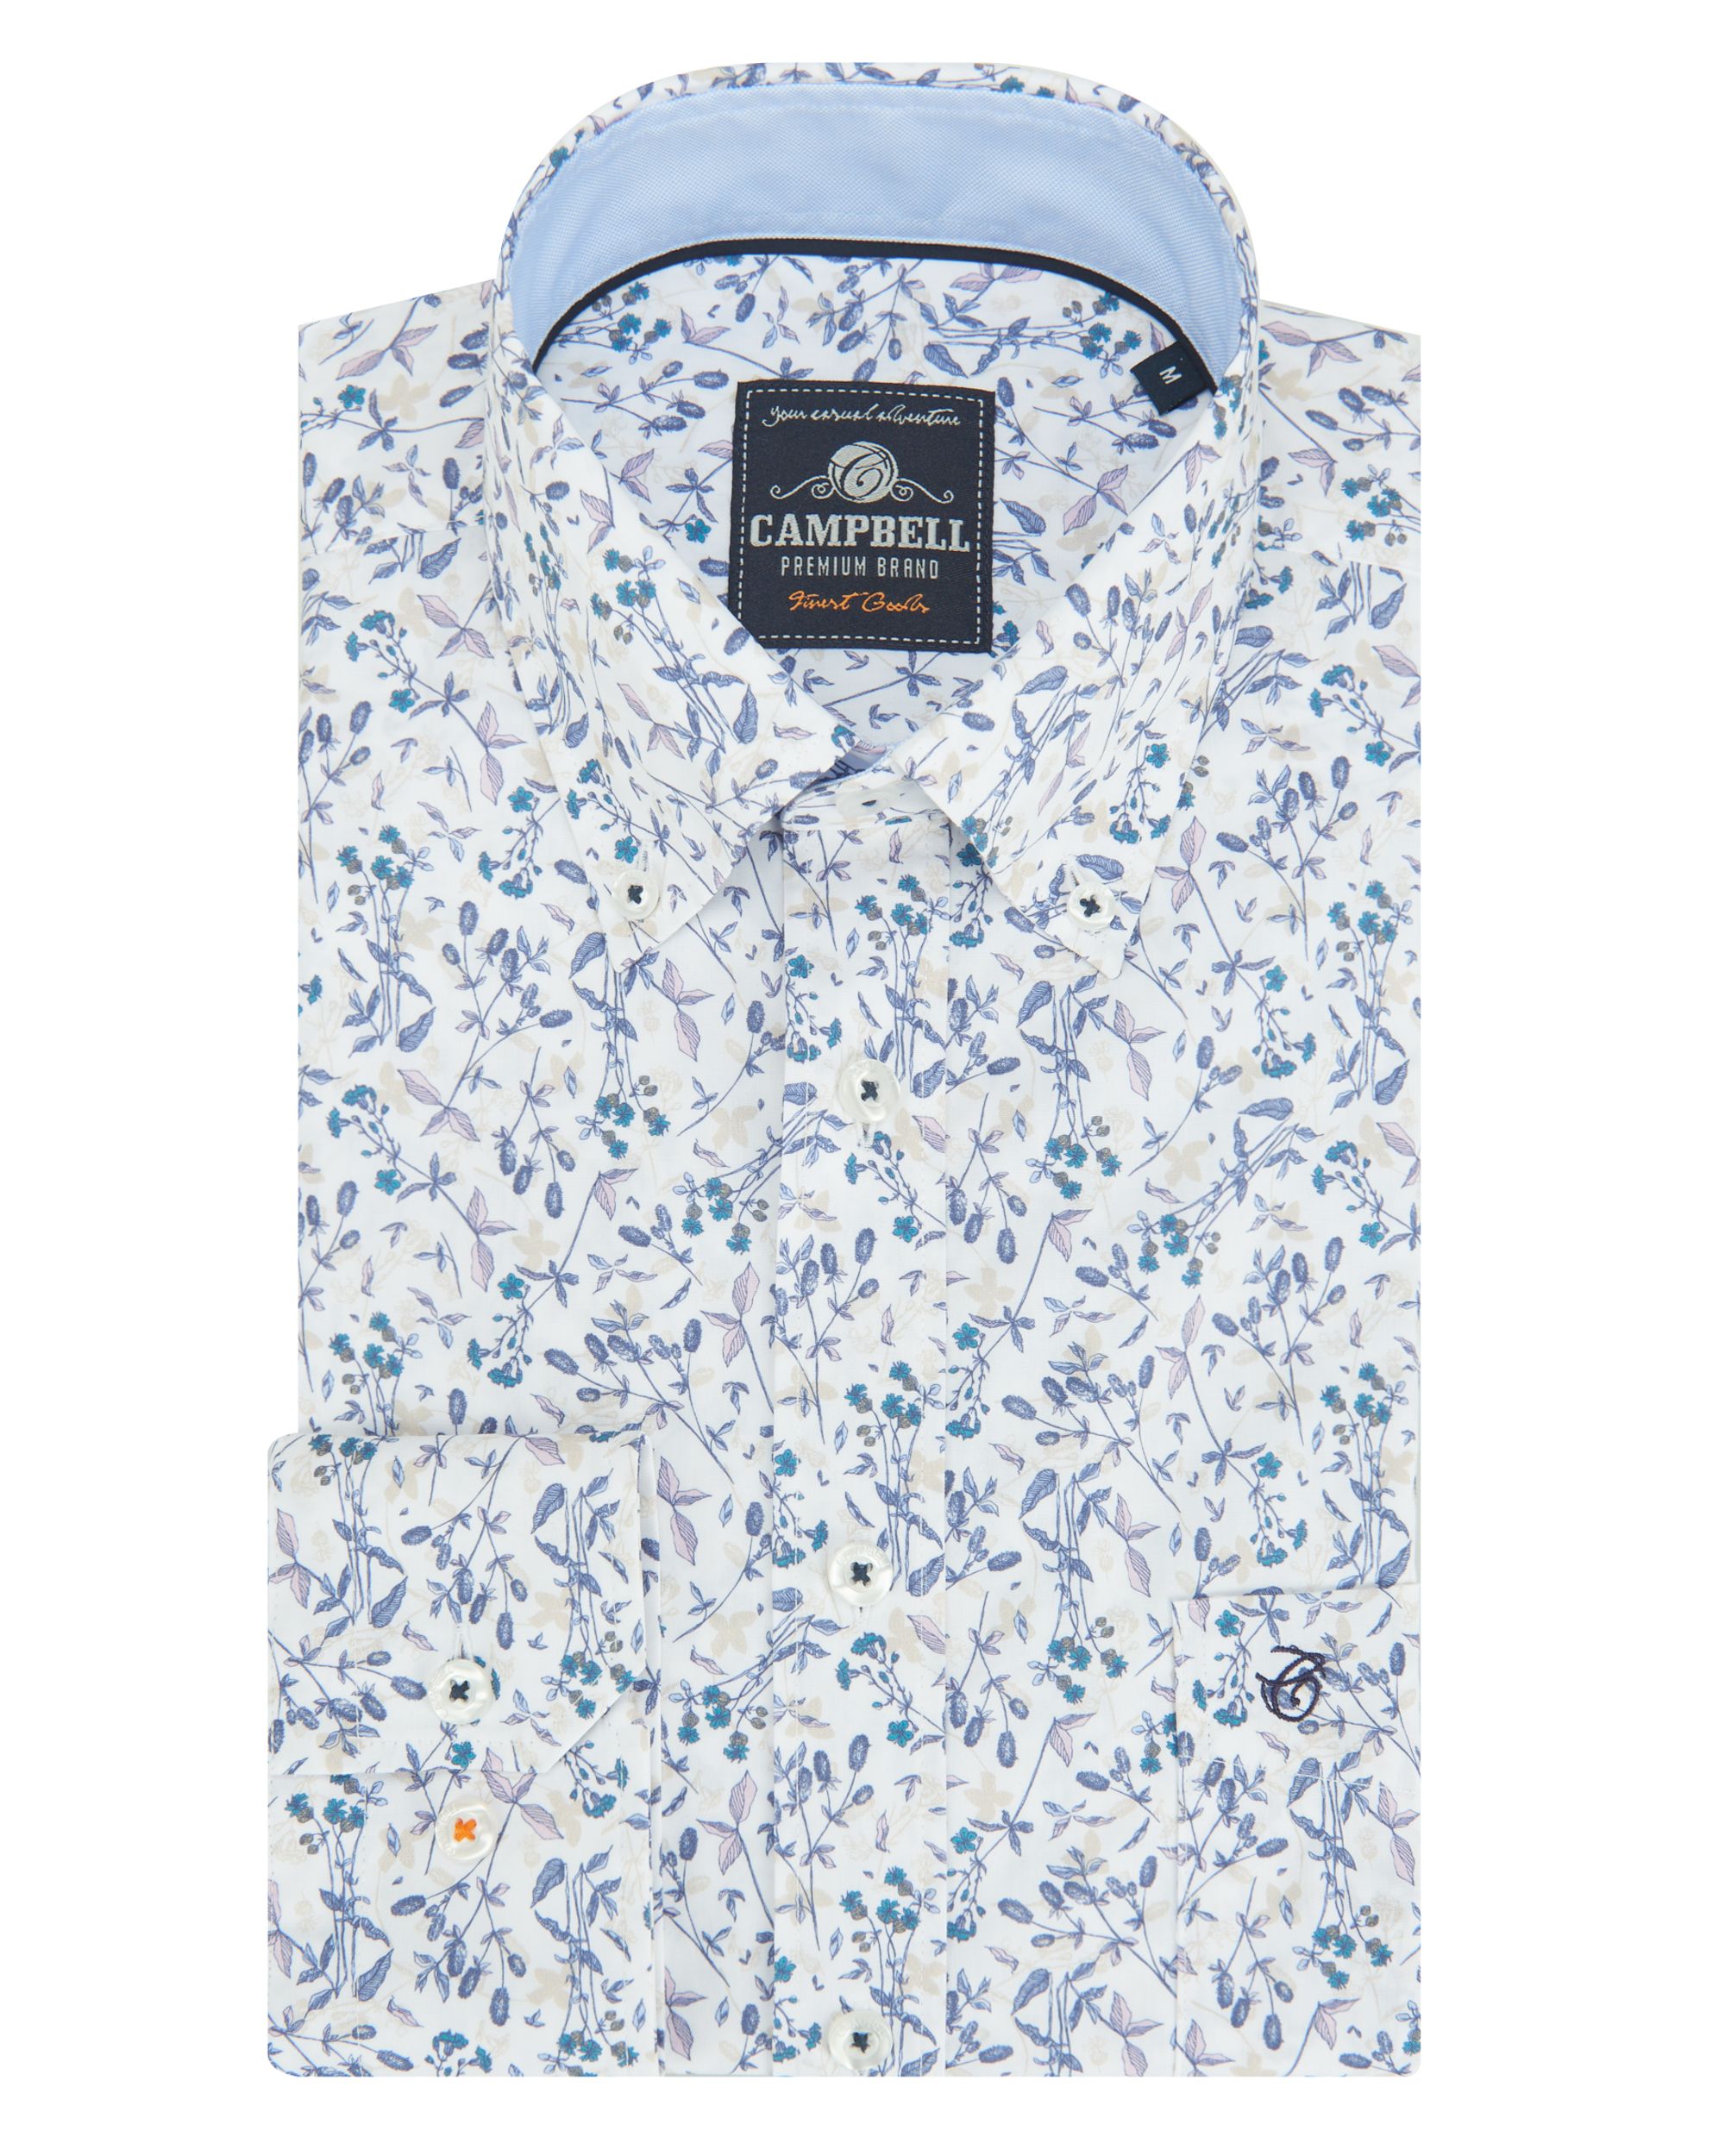 Campbell Classic Casual Overhemd KM Blue Indigo dessin 088326-001-L